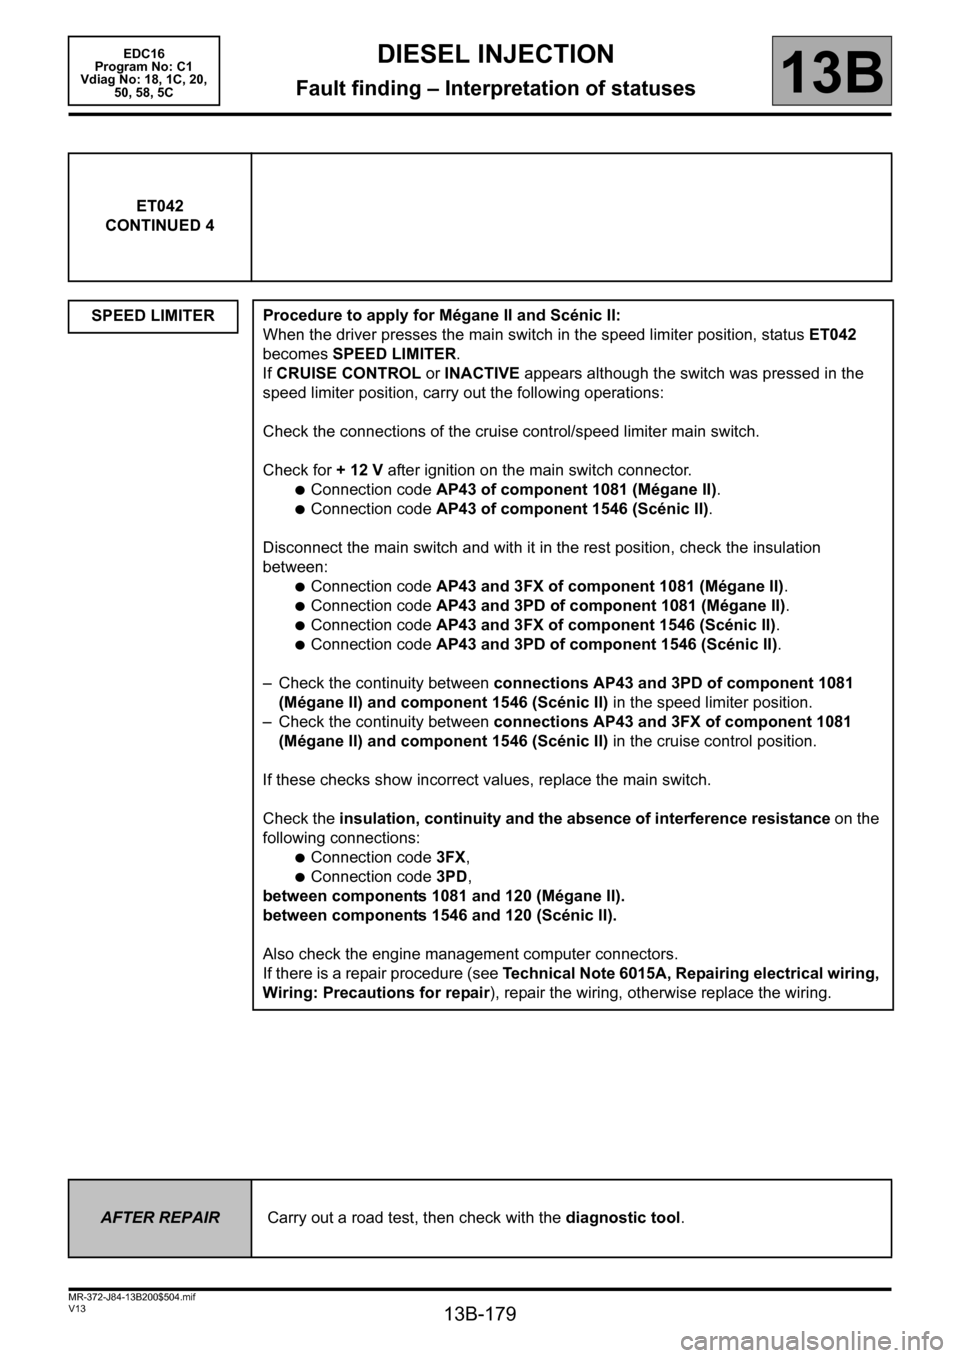 RENAULT SCENIC 2011 J95 / 3.G Engine And Peripherals EDC16 Workshop Manual 13B-179
MR-372-J84-13B200$504.mif
V13
EDC16  
Program No: C1 
Vdiag No: 18, 1C, 20, 
50, 58, 5CDIESEL INJECTION
Fault finding – Interpretation of statuses13B
ET042
CONTINUED 4
SPEED LIMITER
Procedur